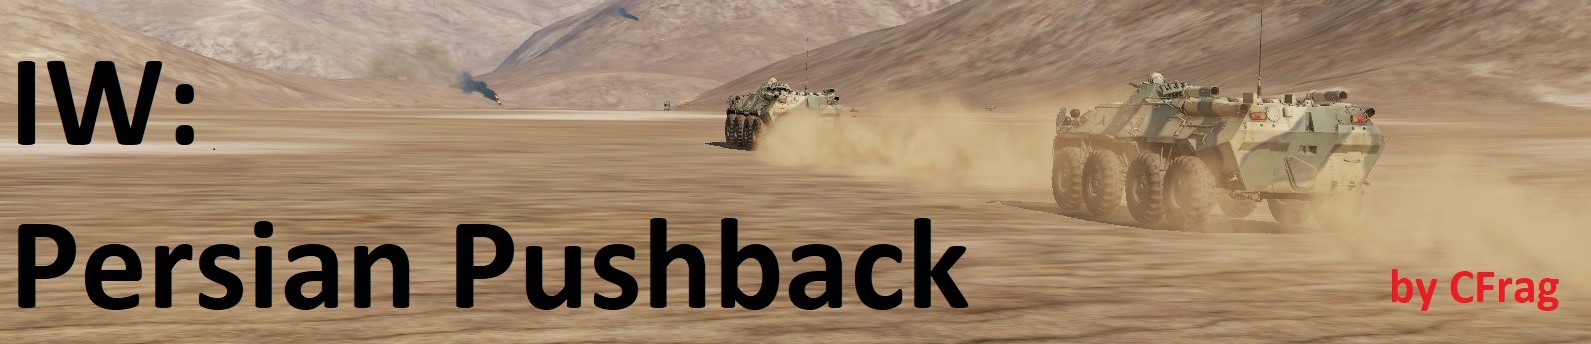 Integrated Warfare: Persian Pushback - Dynamic 1-4 Player Coop multi-module